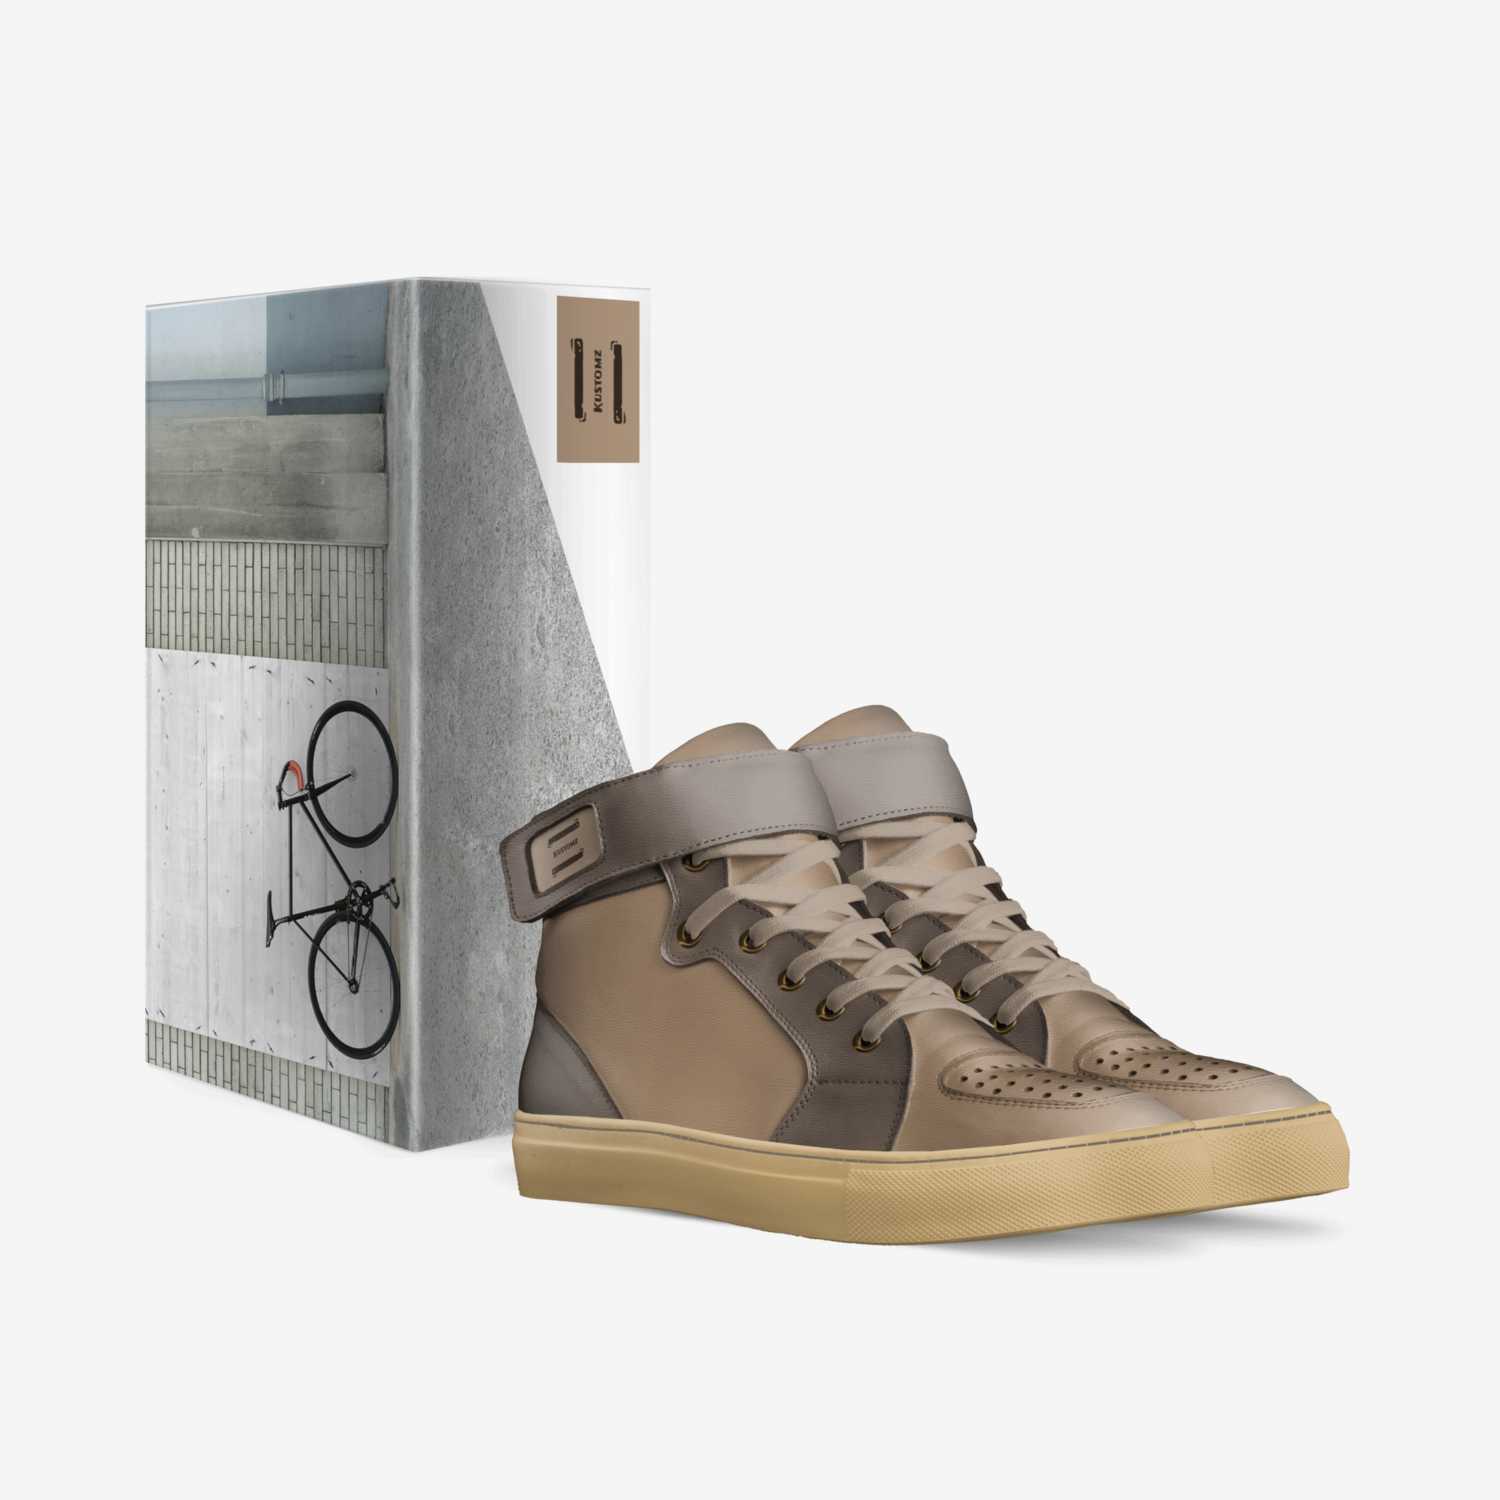 Kustomz custom made in Italy shoes by Benjamin Smith | Box view